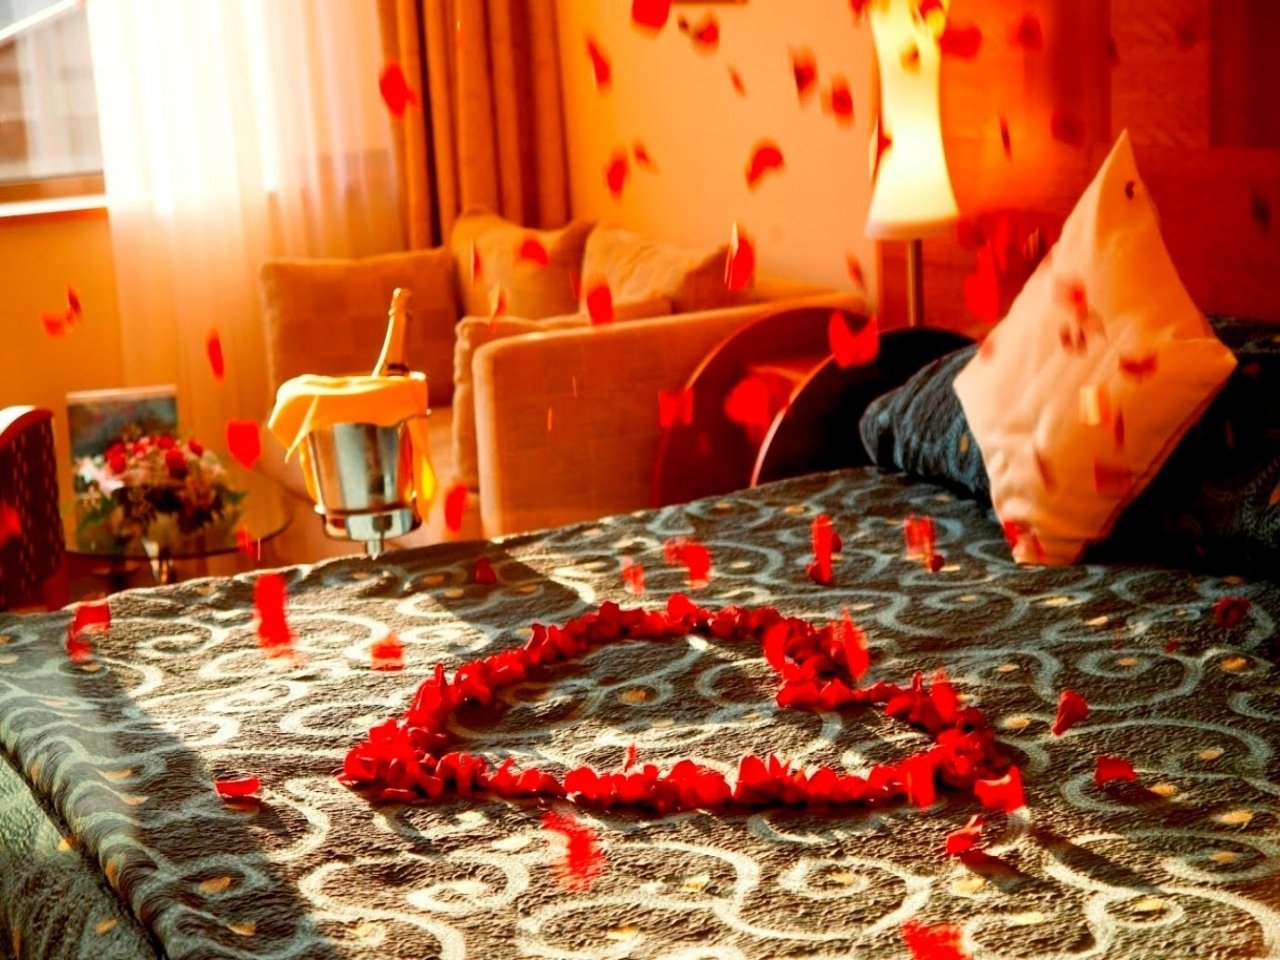 10 Most Popular Romantic Ideas For Him In A Hotel romantic room decoration hotel ideas for him dfbd tikspor 2022